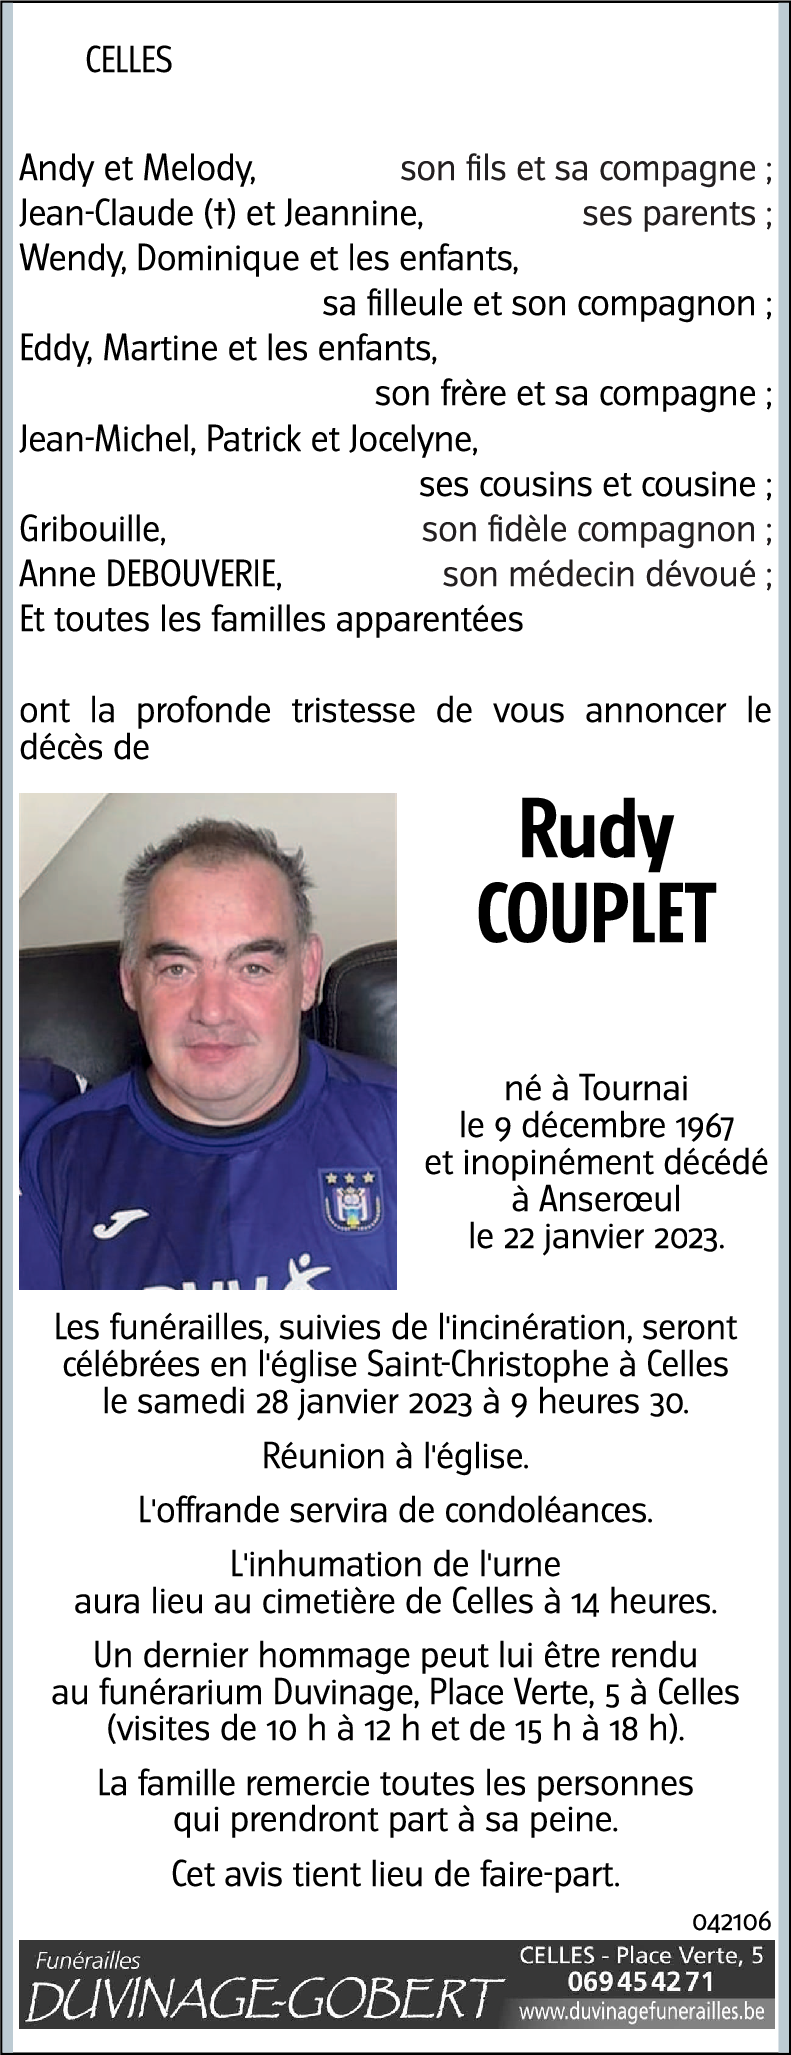 Rudi COUPLET